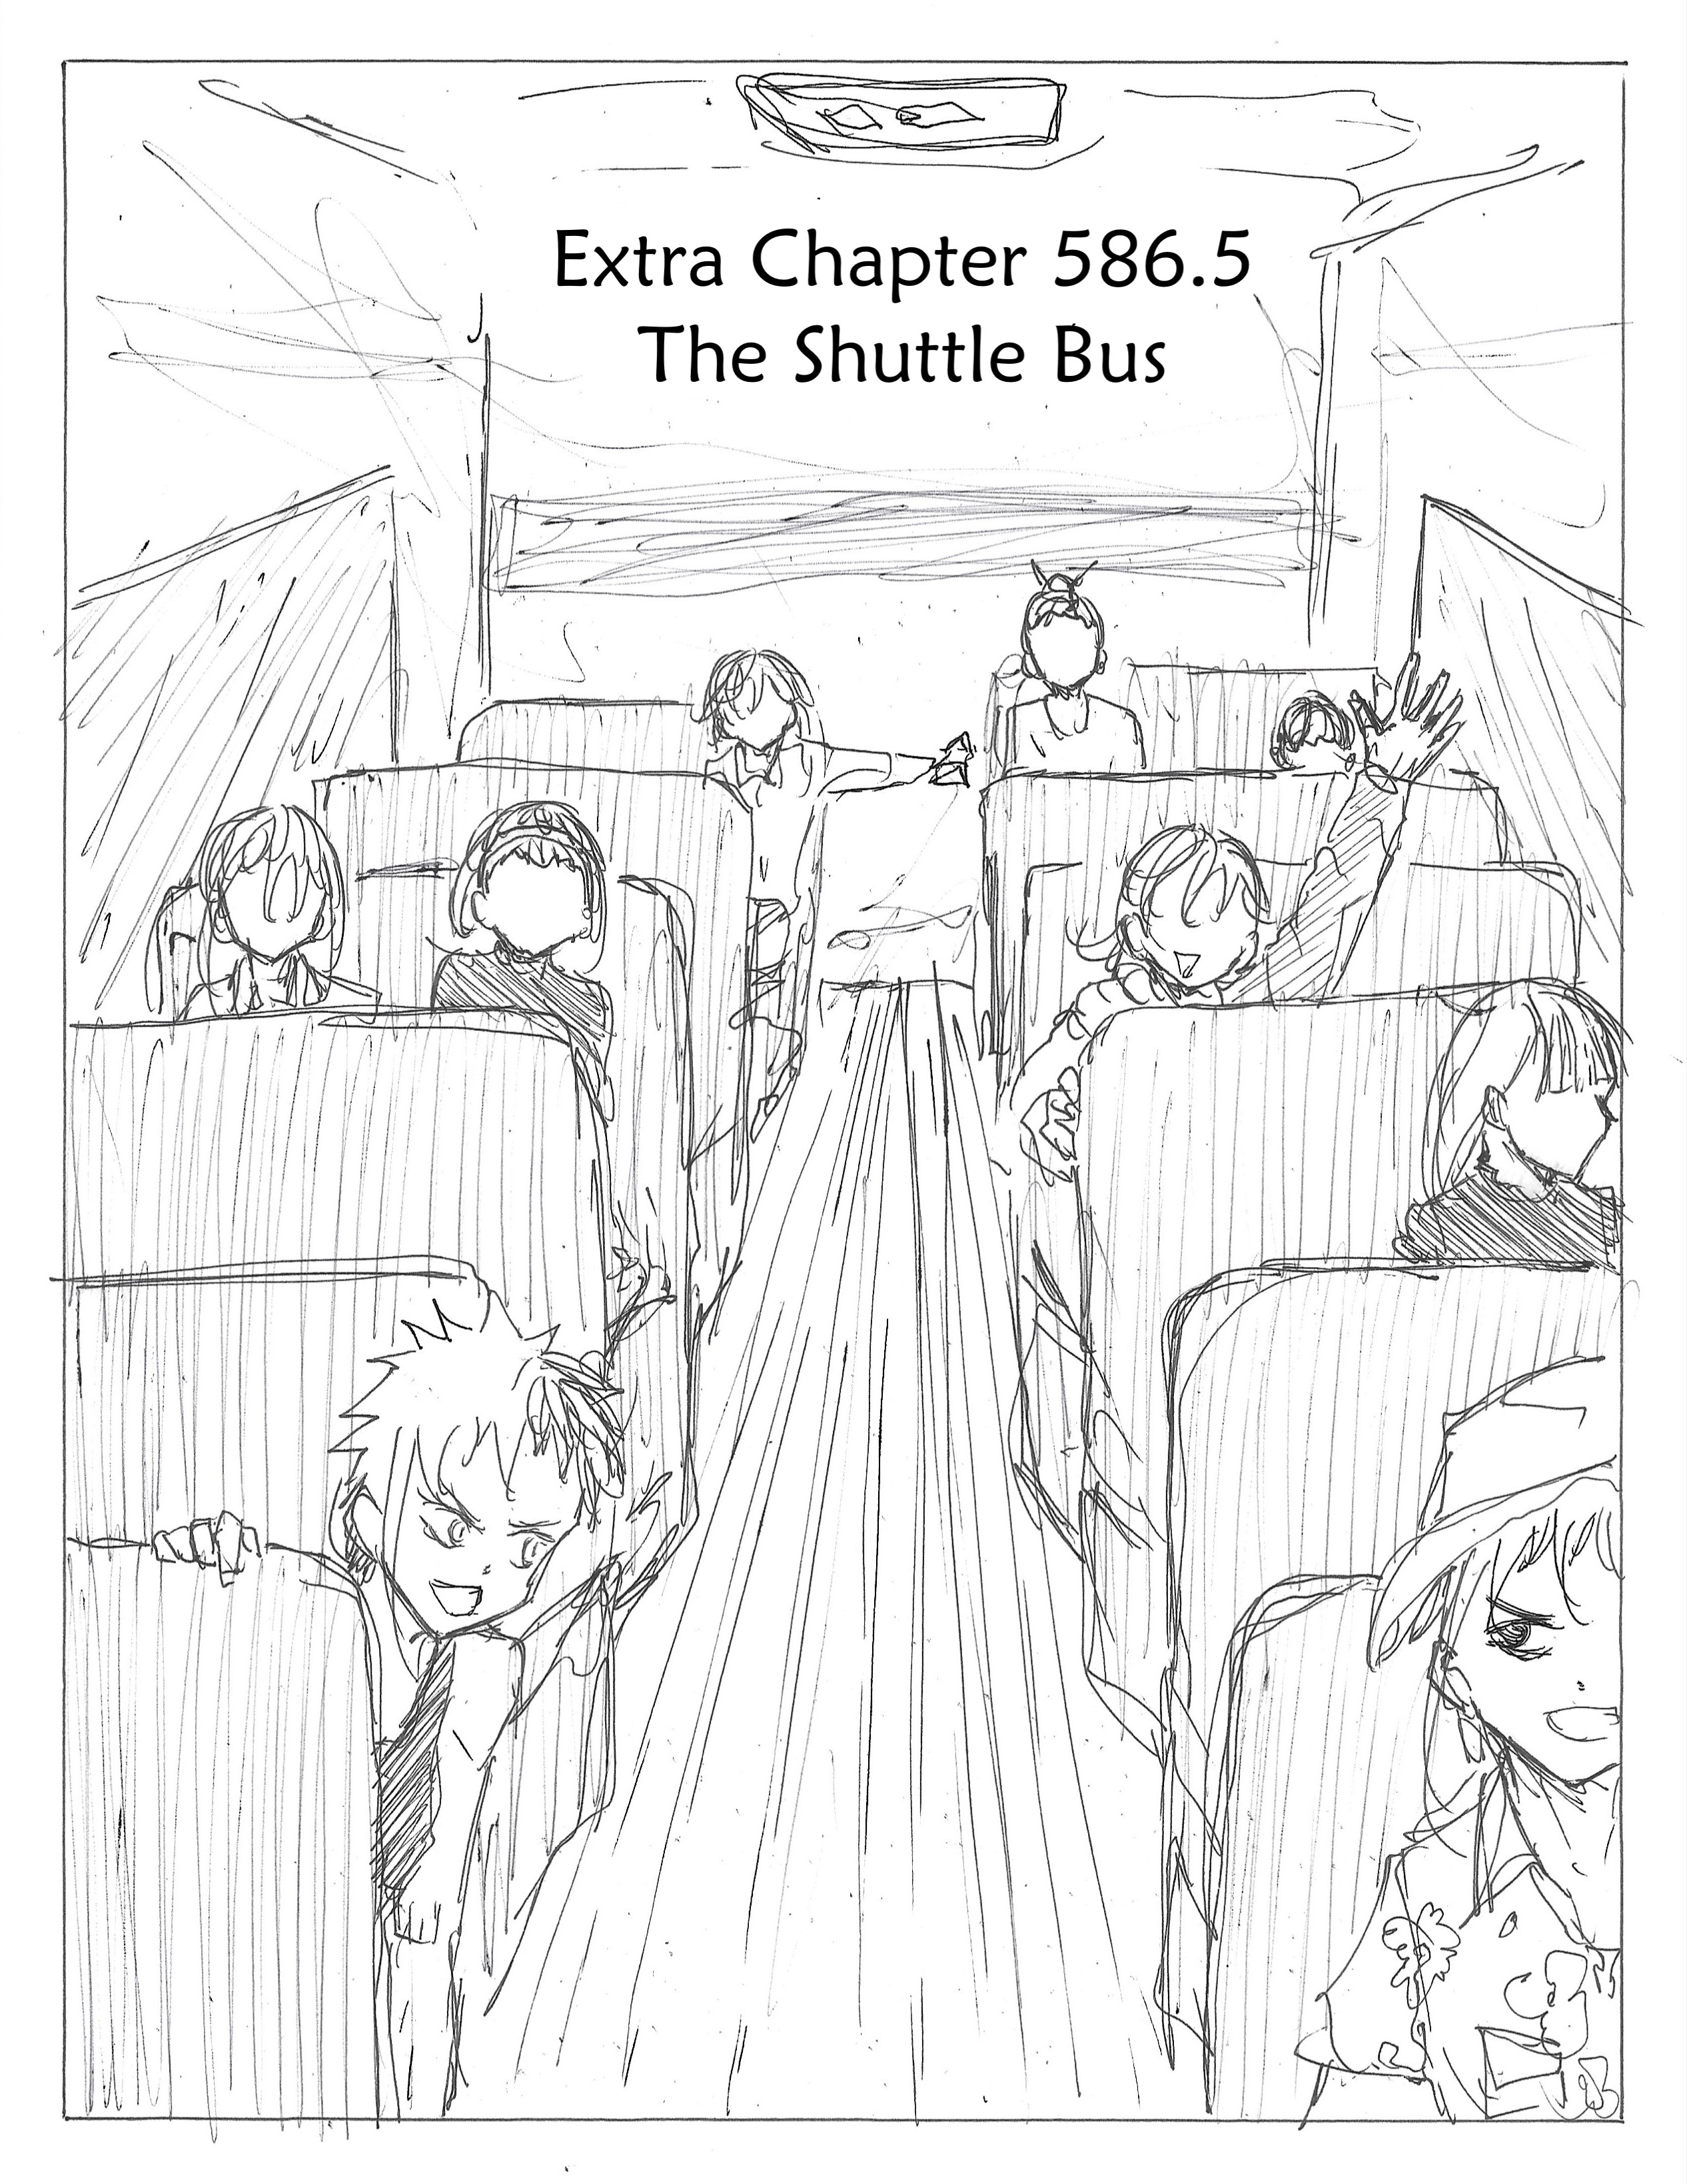 Sound Asleep: Forgotten Memories Vol.6 Chapter 586.5: The Shuttle Bus - Picture 1